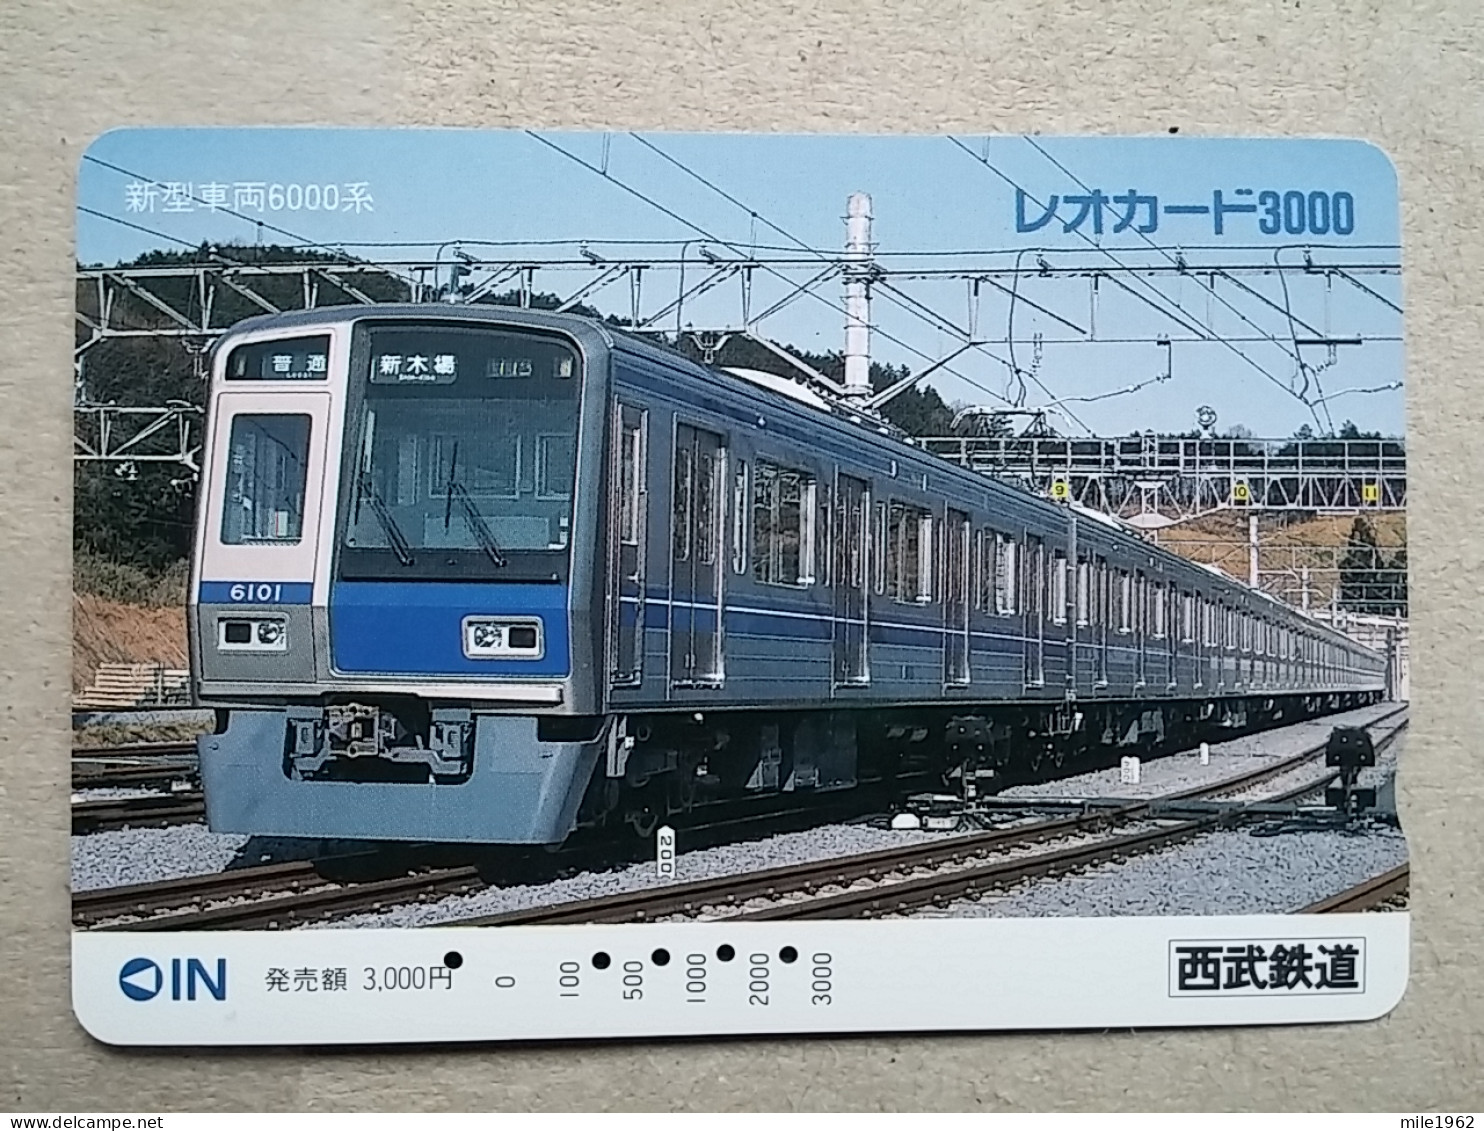 T-615 - JAPAN, Japon, Nipon, Carte Prepayee, Prepaid Card, CARD, RAILWAY, TRAIN, CHEMIN DE FER - Treni